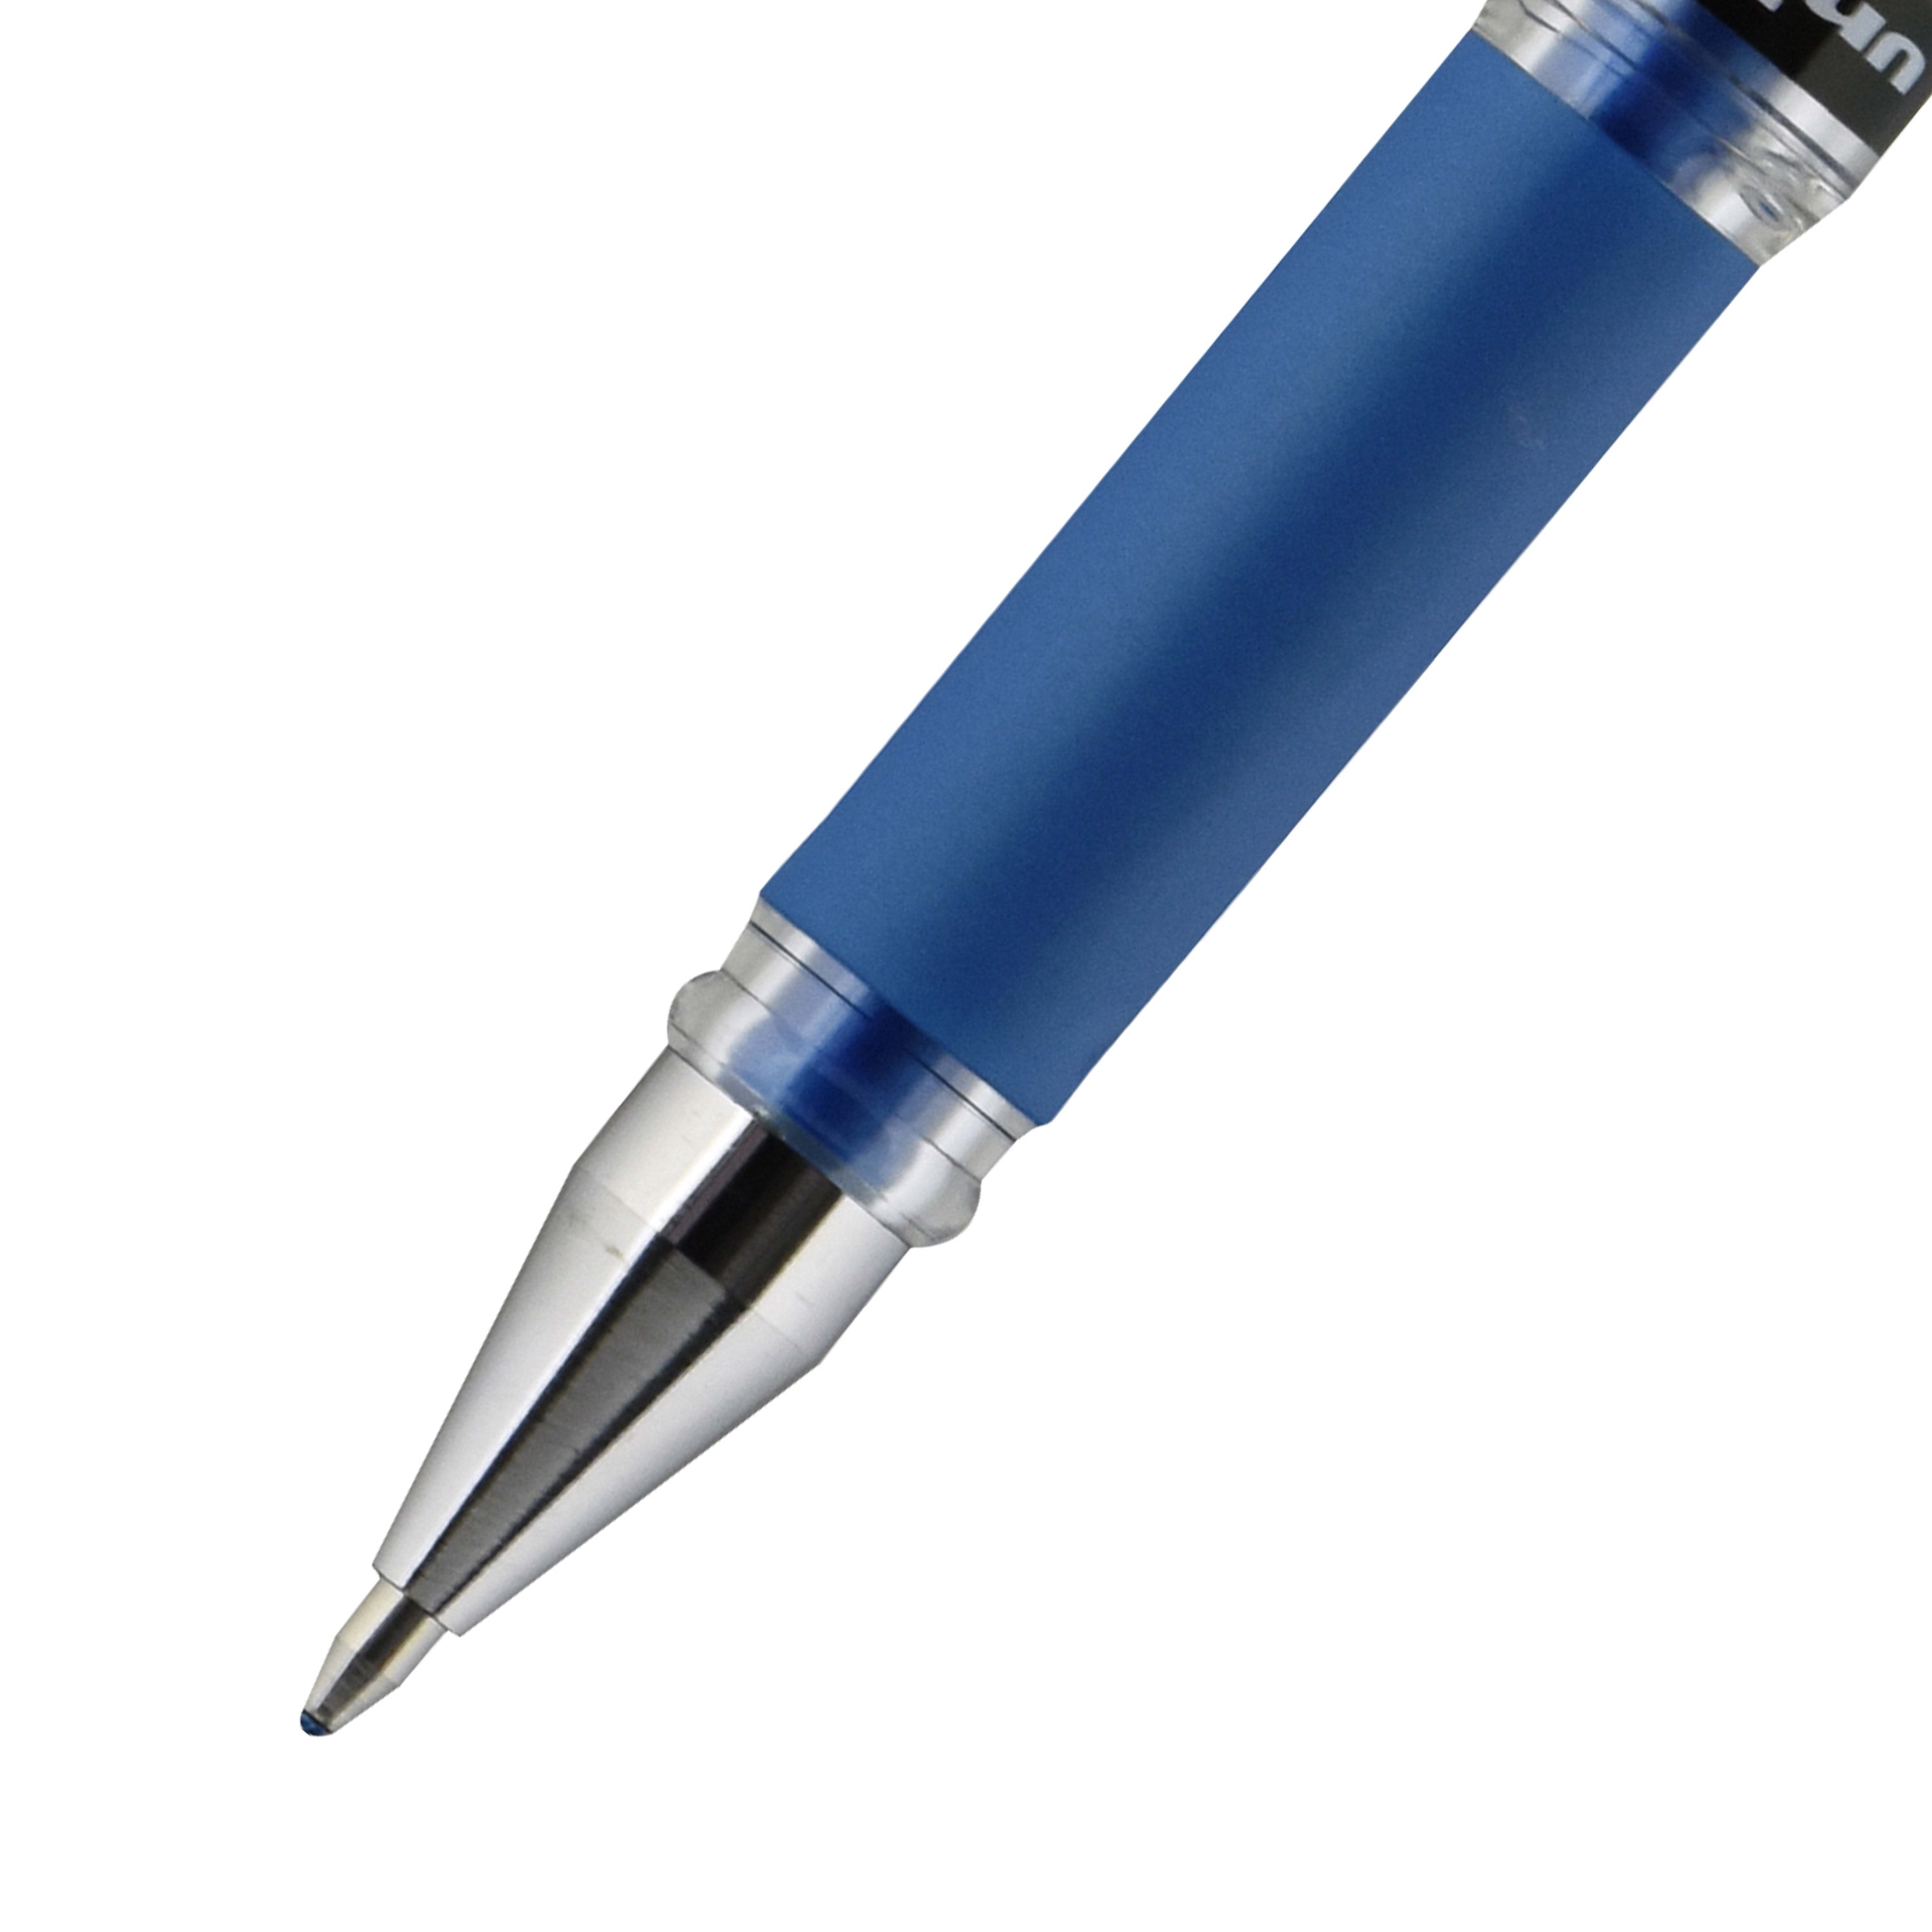 Uni-Ball 218990000 UM-153S Signo Impact Gel Pens with Rubber Grip, Black Gel, 1mm Nib (Pack of 12)